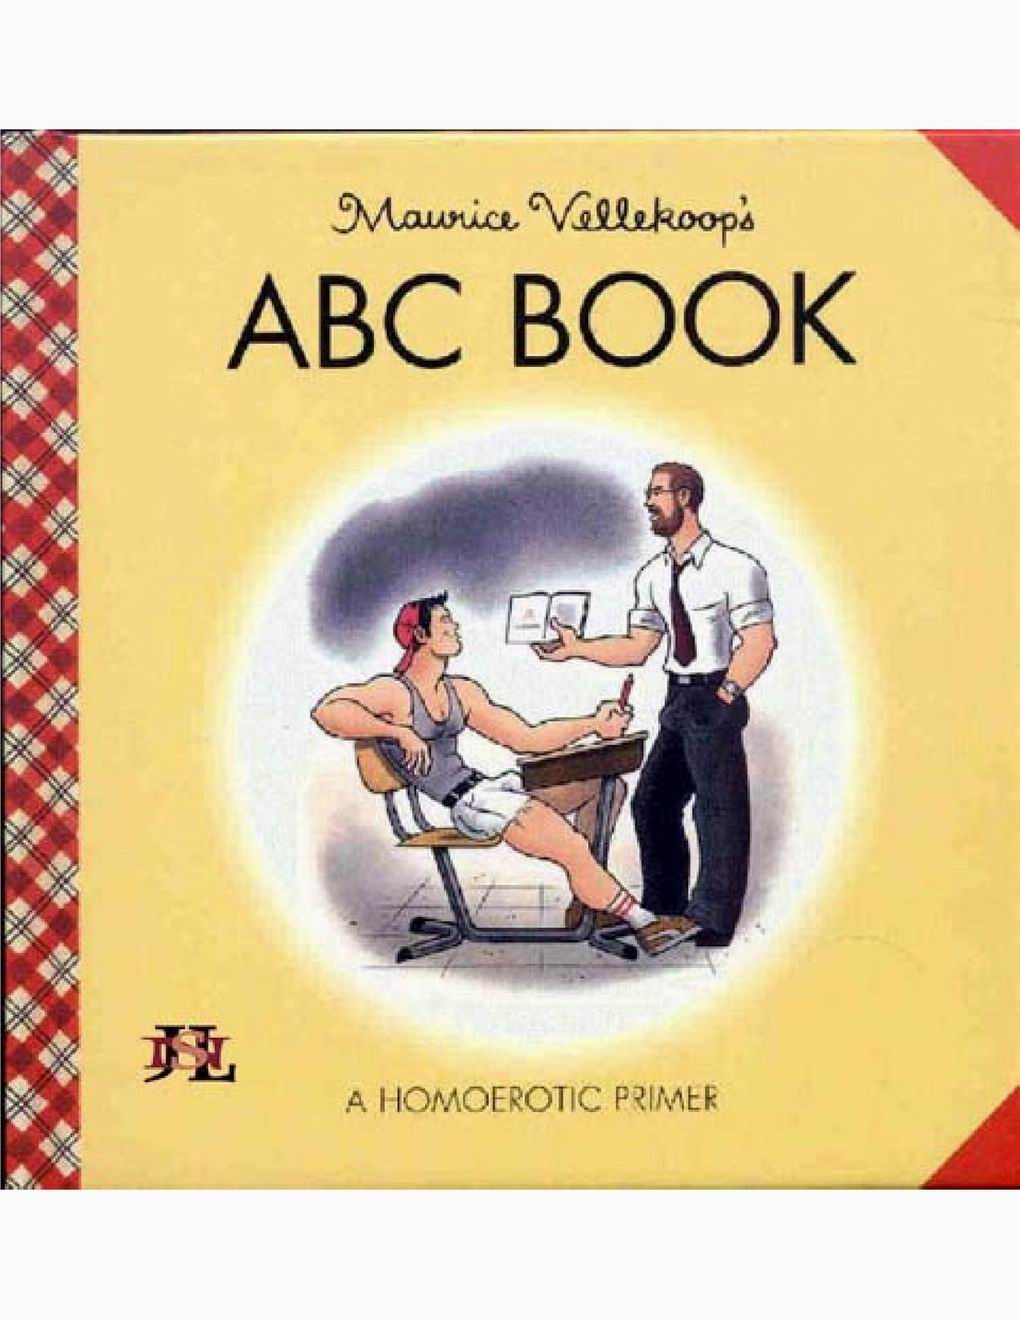 Maurice Vellekoop - ABC Book_p01.jpg